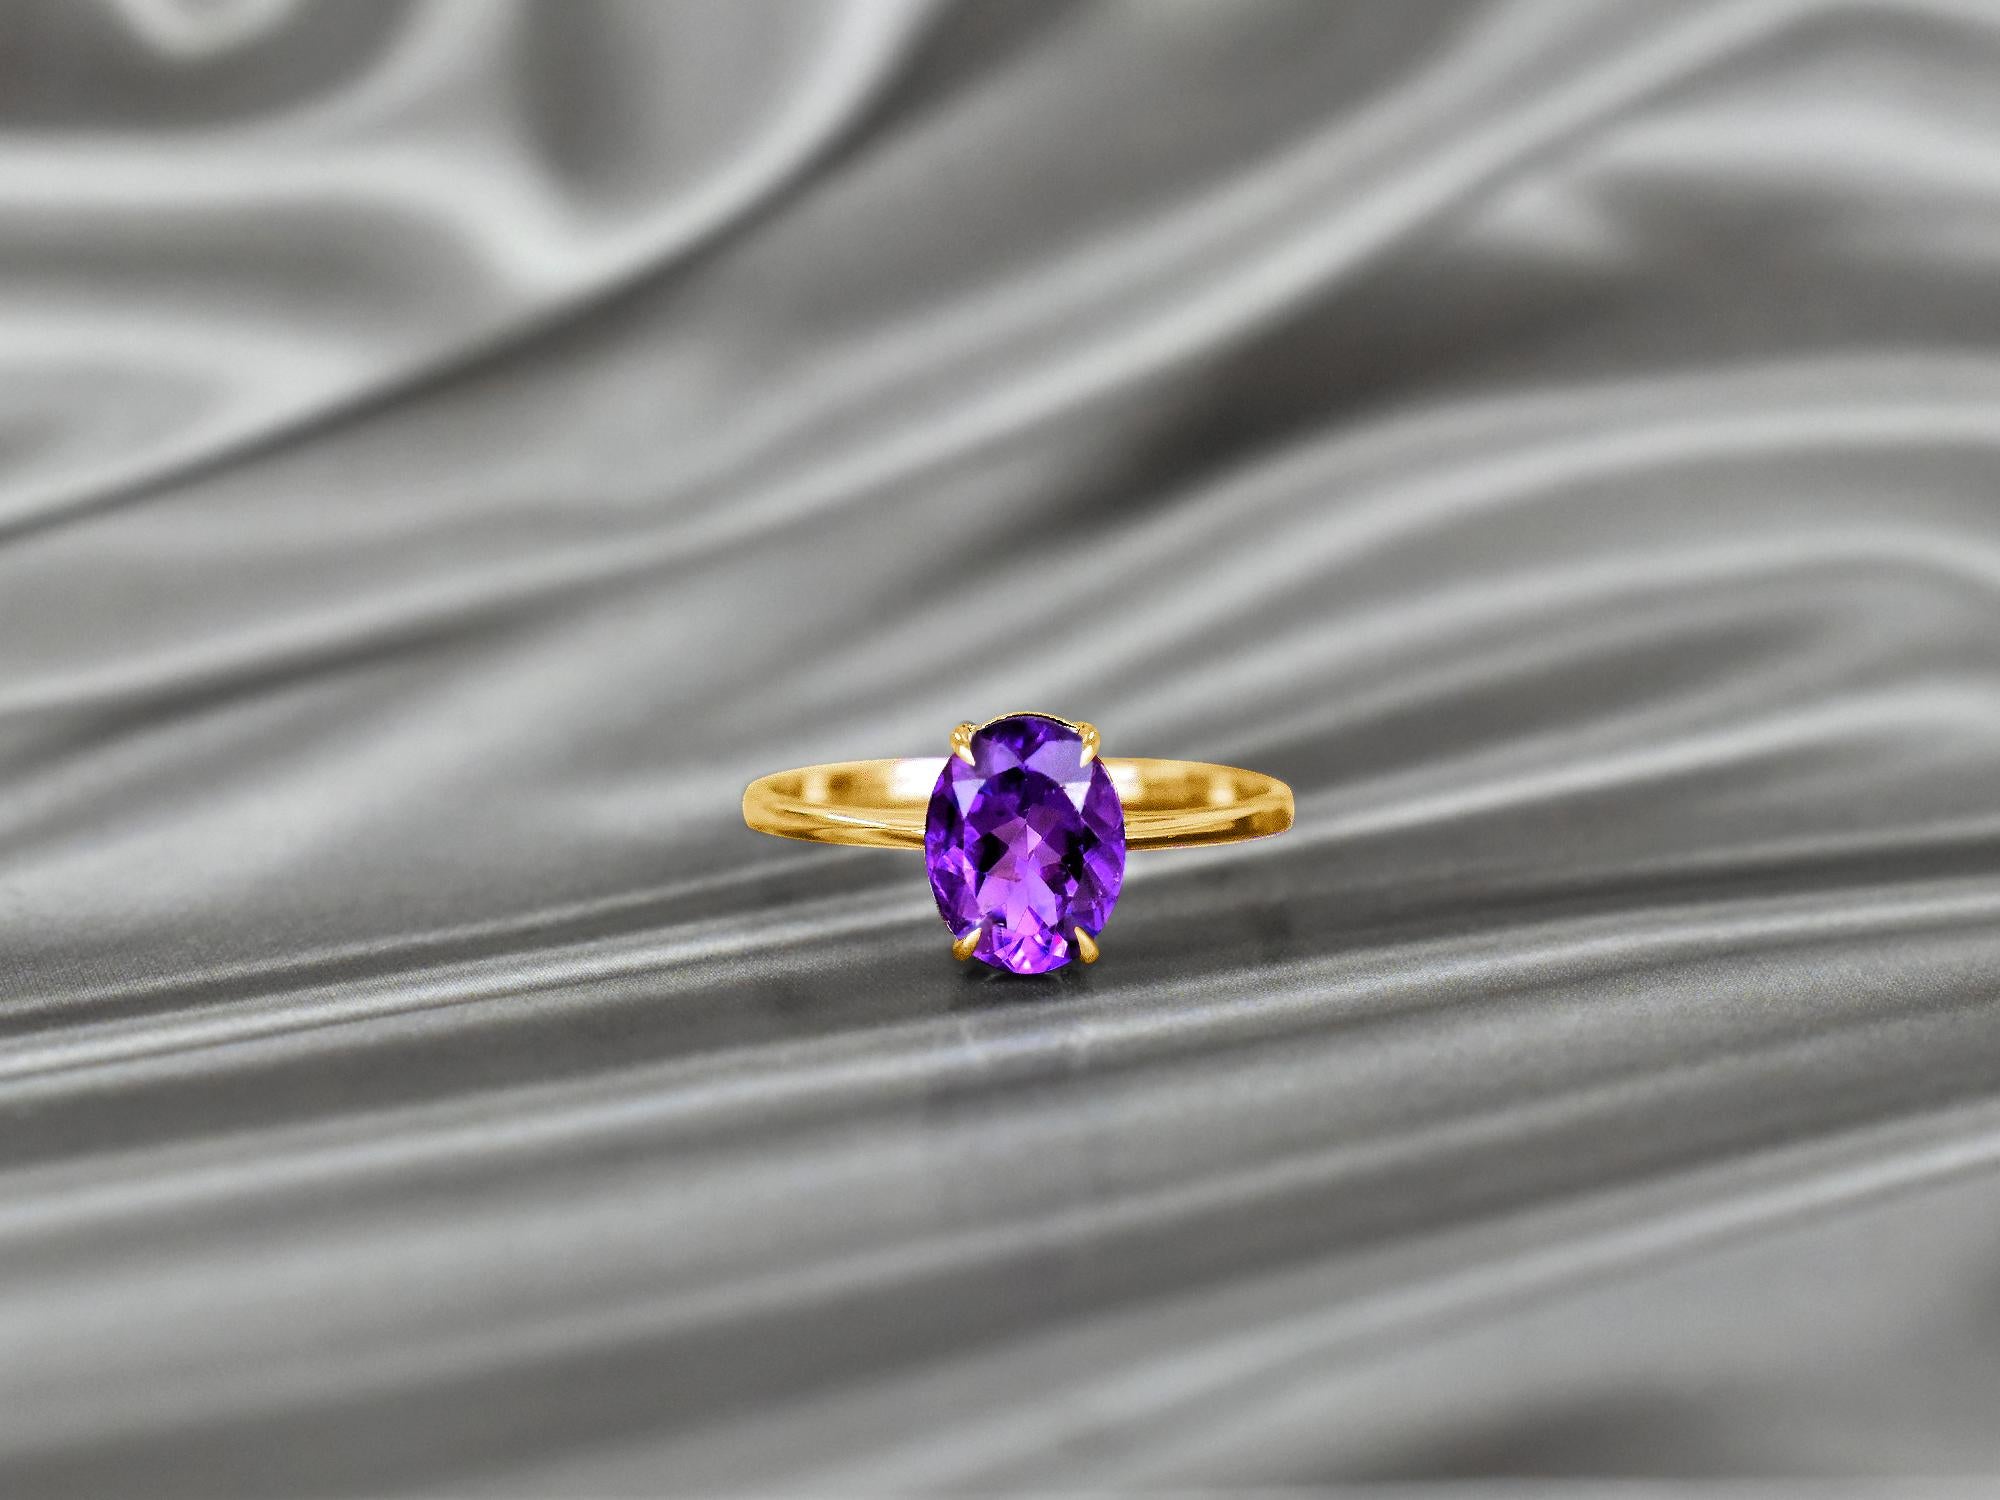 For Sale:  10k Gold Oval Gemstone 9x7 mm Oval Cut Gemstone Ring Gemstone Engagement Ring 3